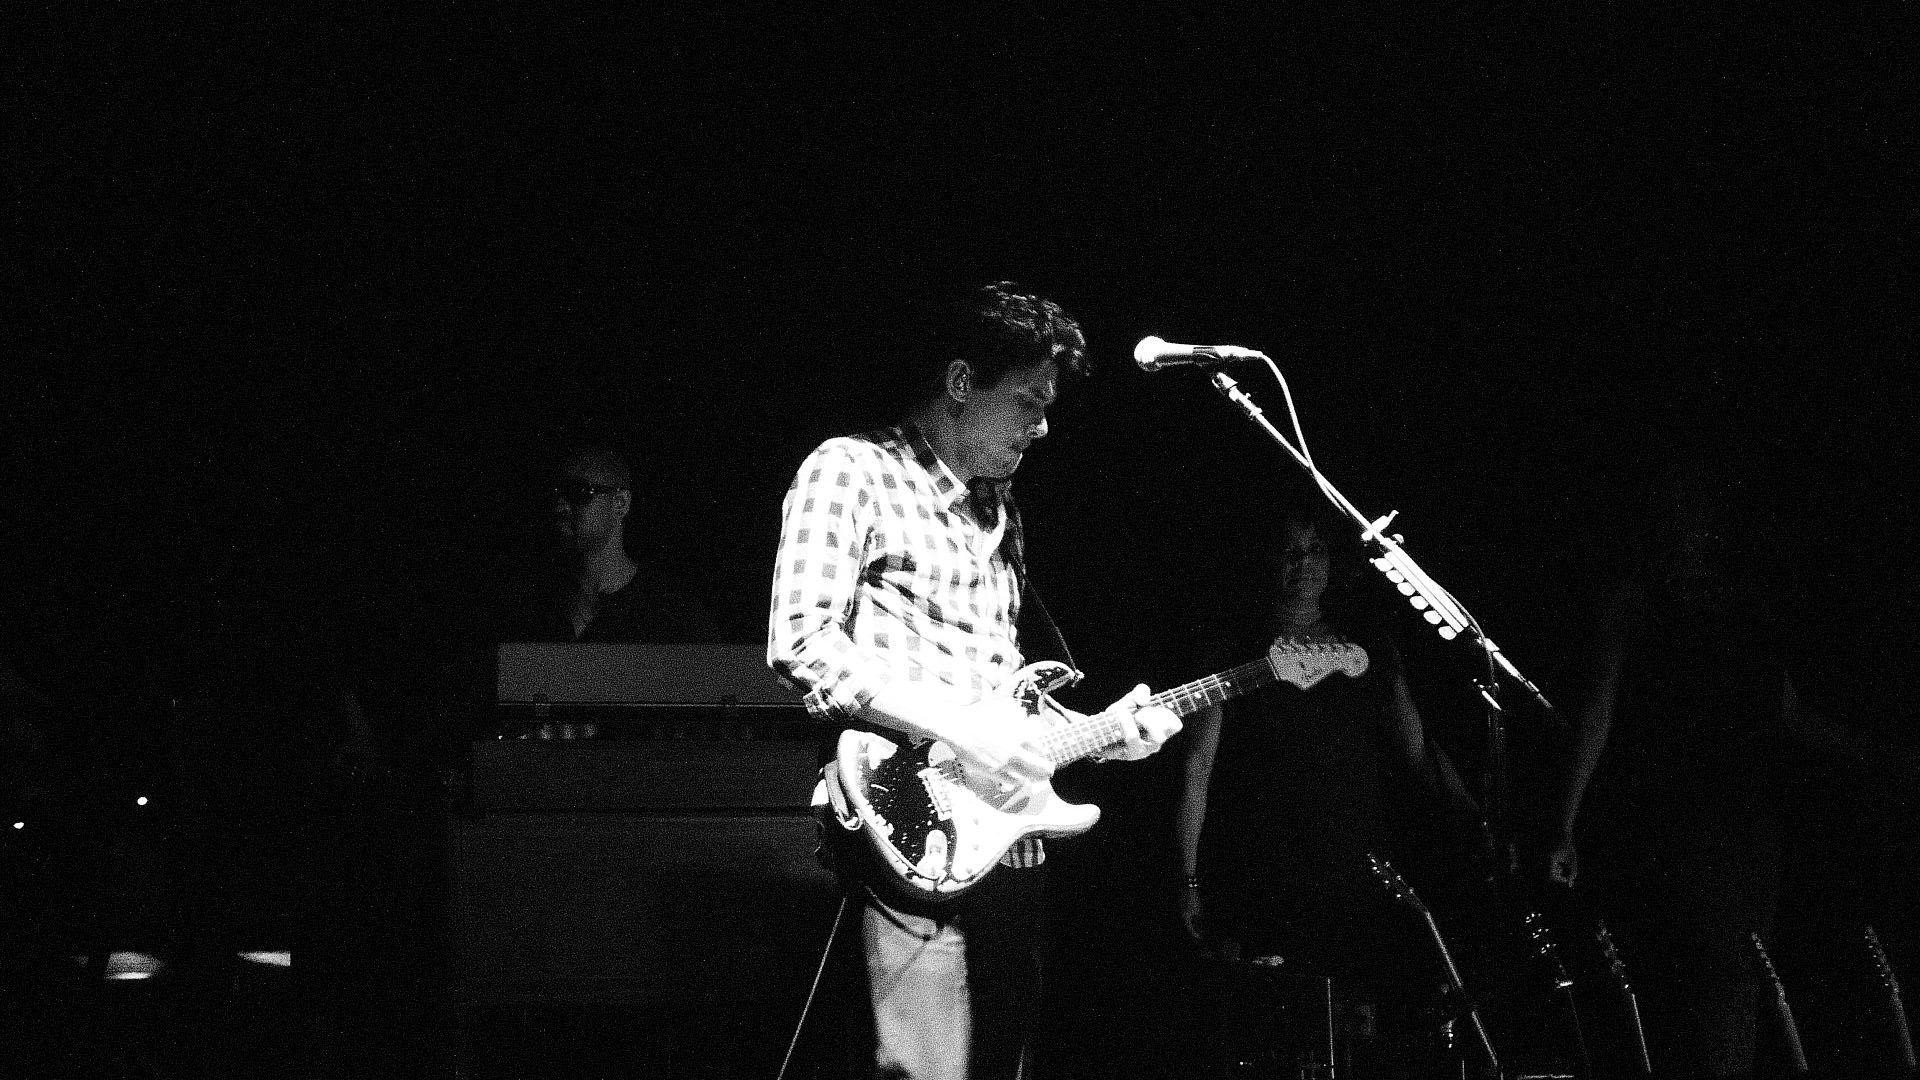 1920x1080 John Mayer in Concert | theKellyMuir